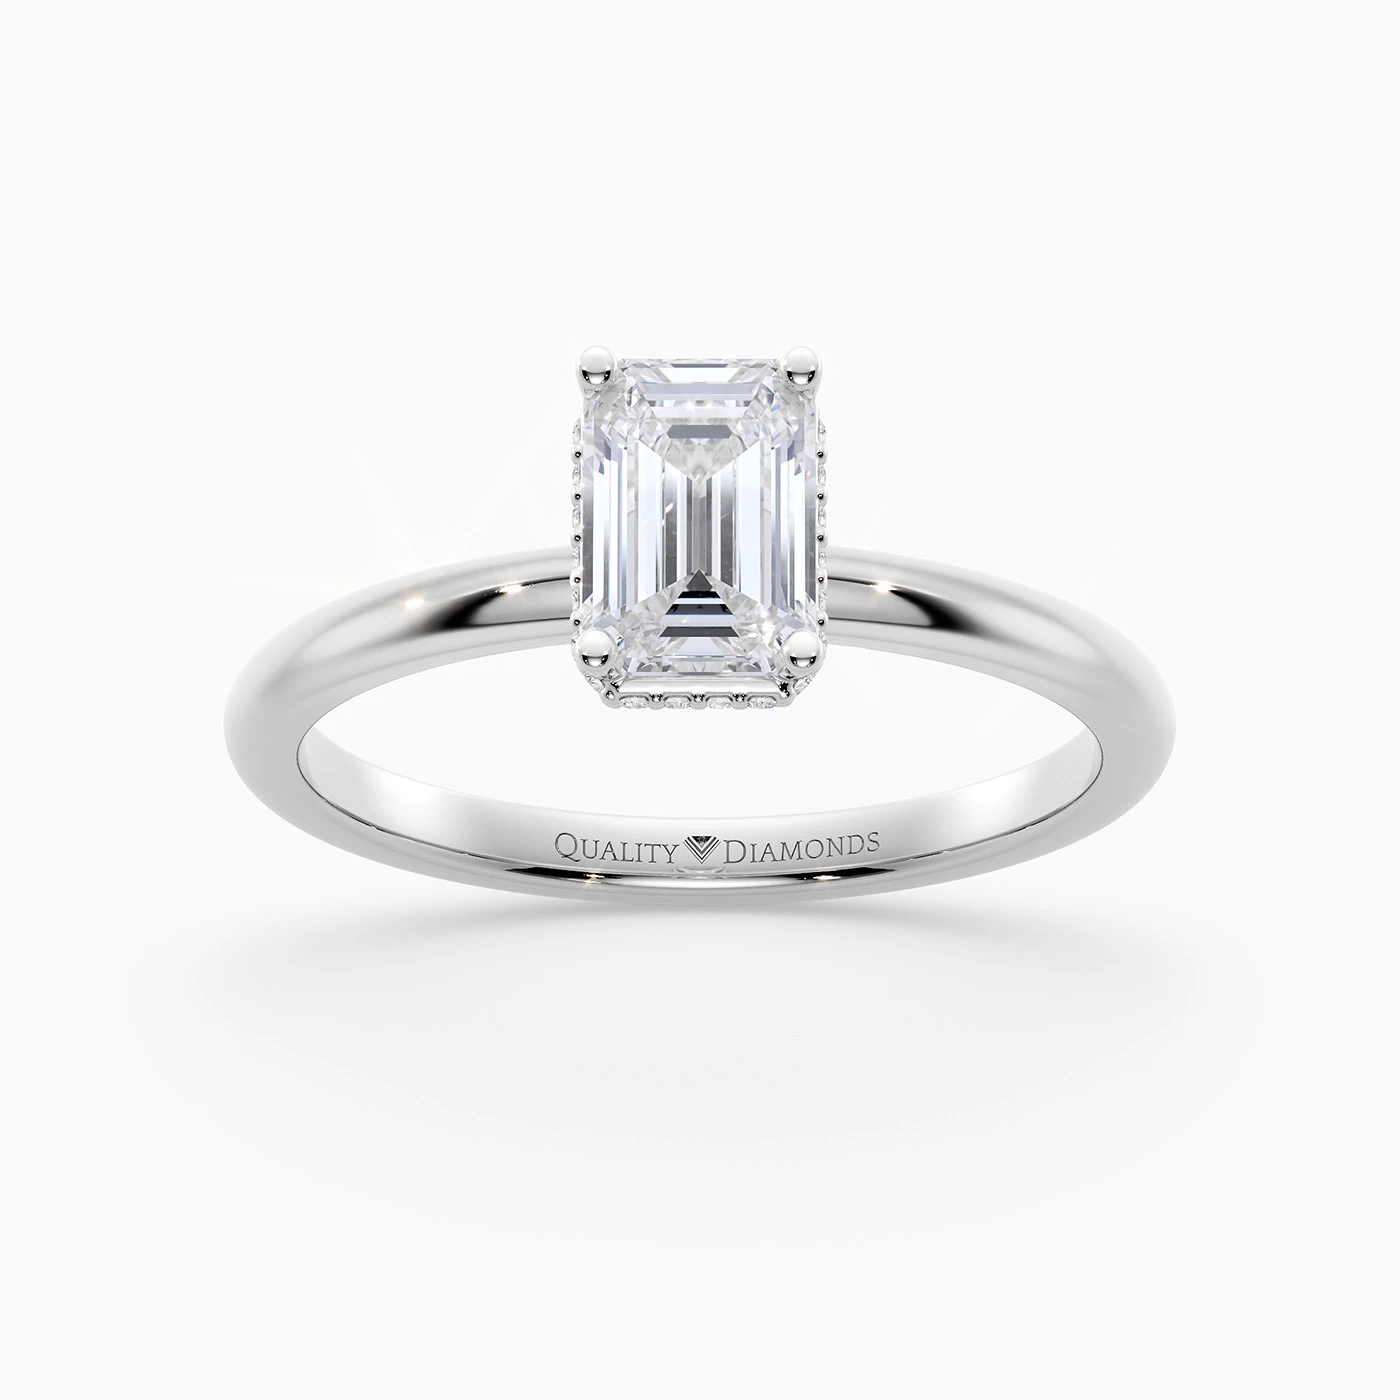 Emerald Liraz Hidden Halo Diamond Ring in 9K White Gold